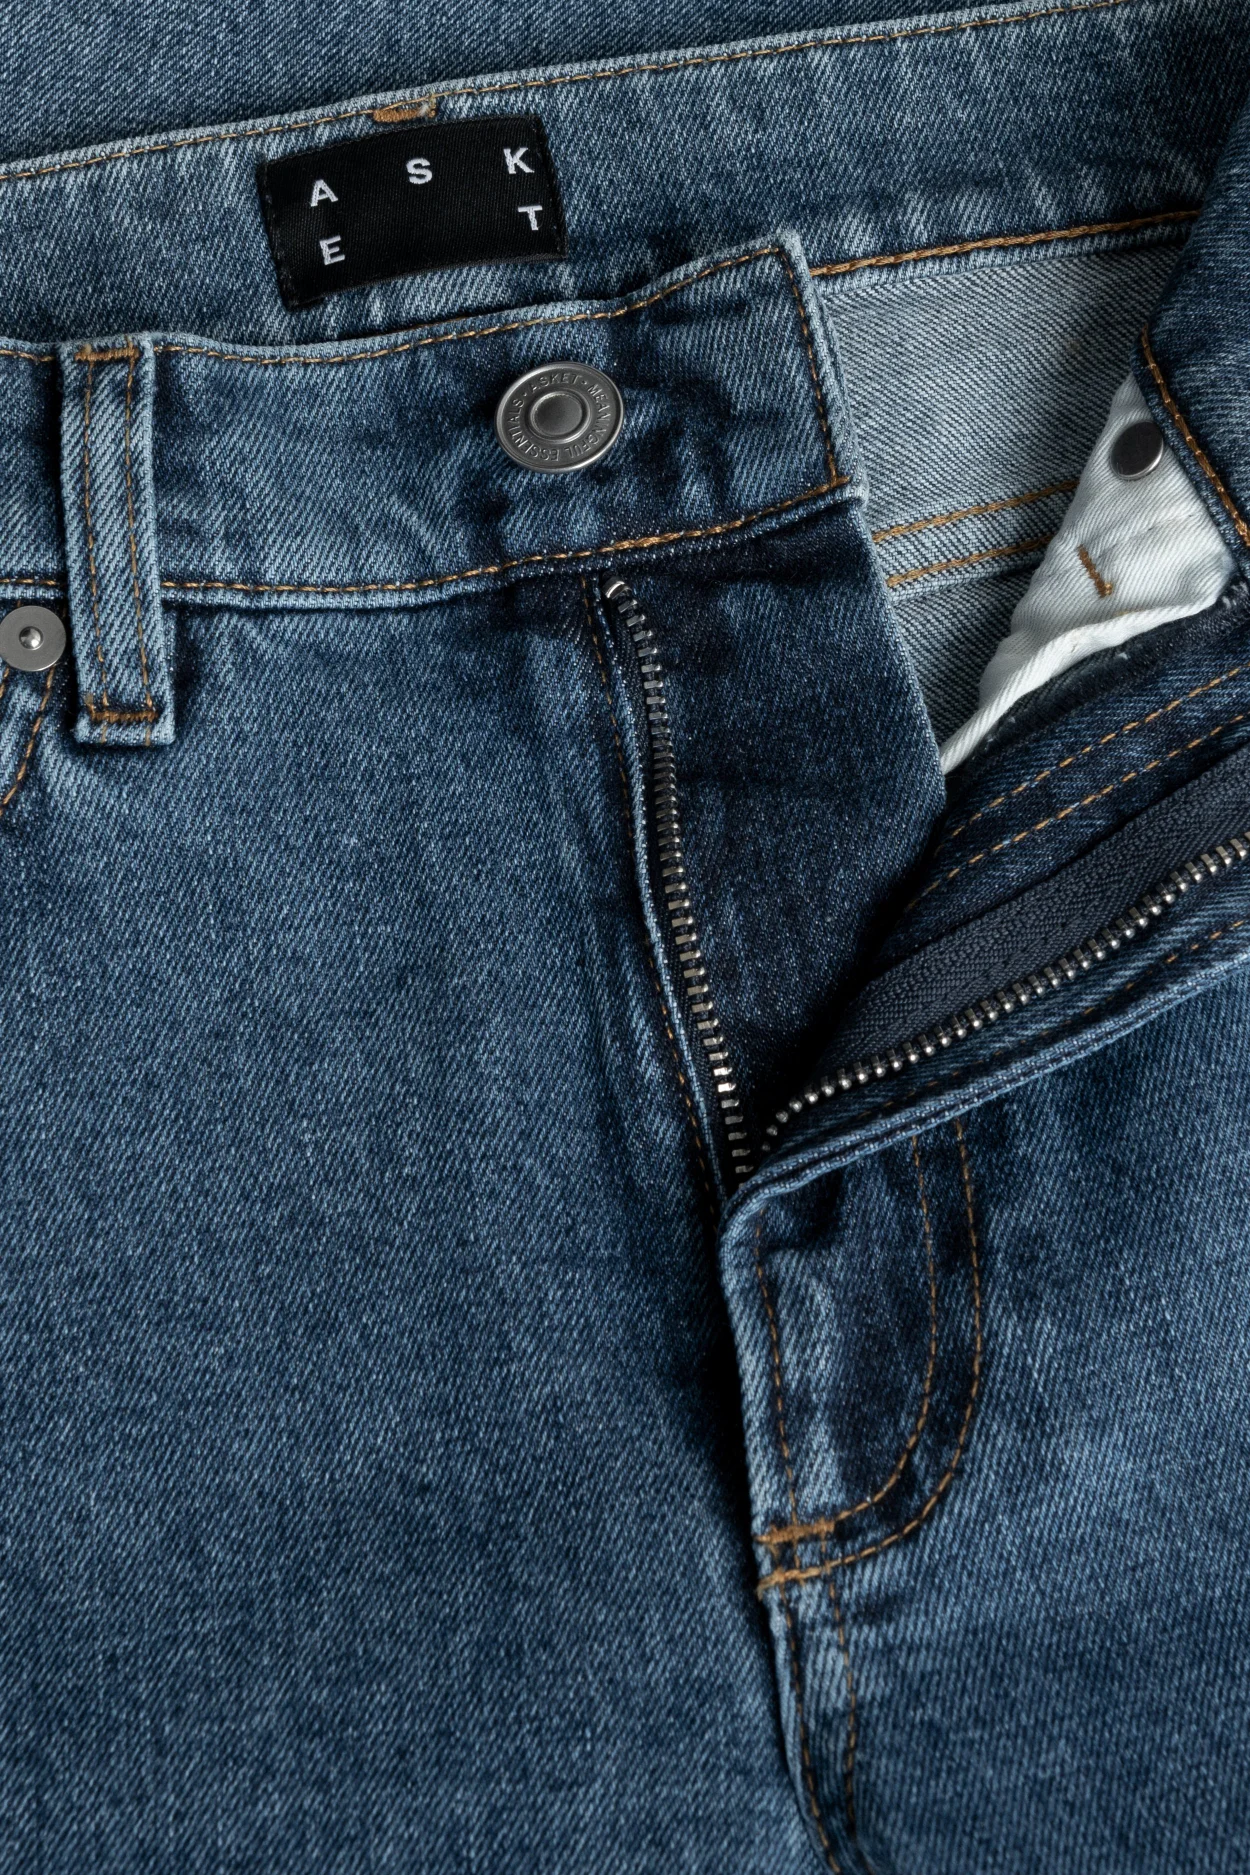 C.O.F Studio | Ecru Stone Washed Kuroki Cotton M5 Jeans – Baltzar-saigonsouth.com.vn